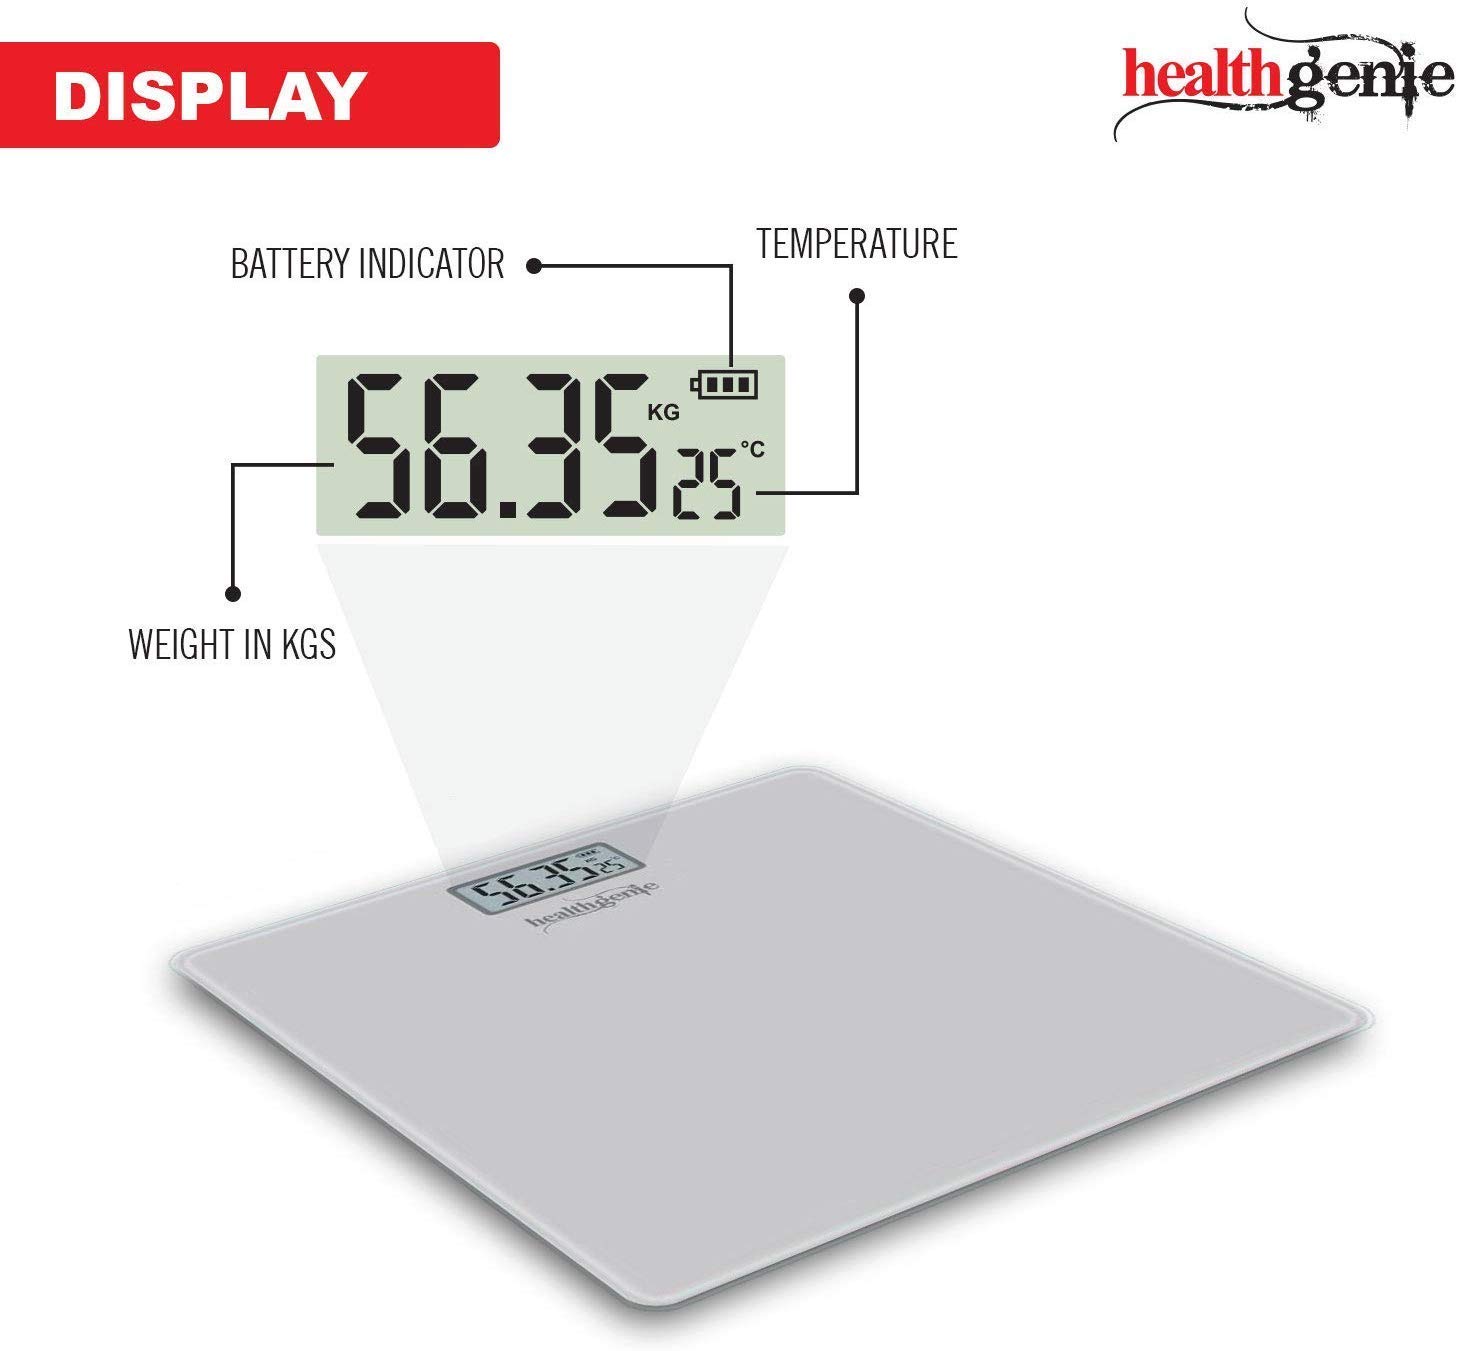 Healthgenie Digital Personal Weighing Scale Hd 221 Mini Silver Display